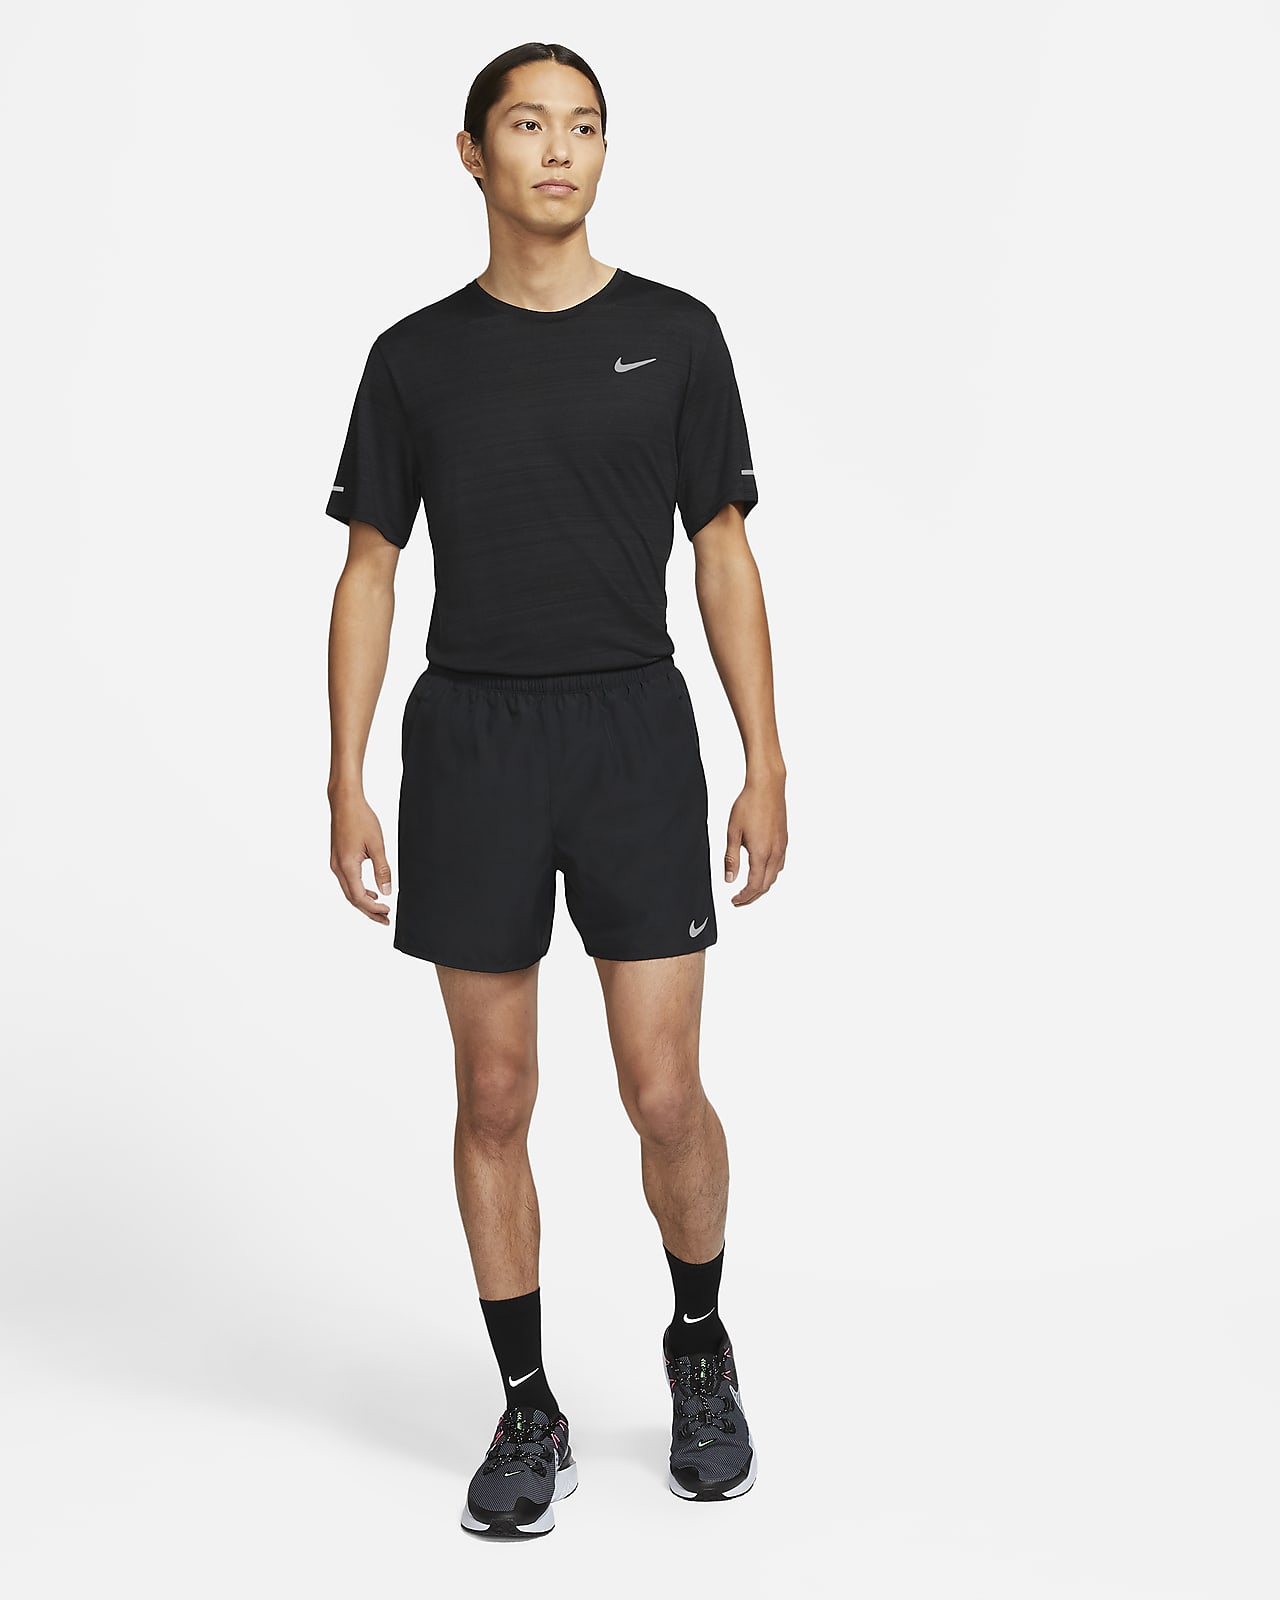 Nike公式 ナイキ チャレンジャー メンズ ランニングショートパンツ インナー付き オンラインストア 通販サイト